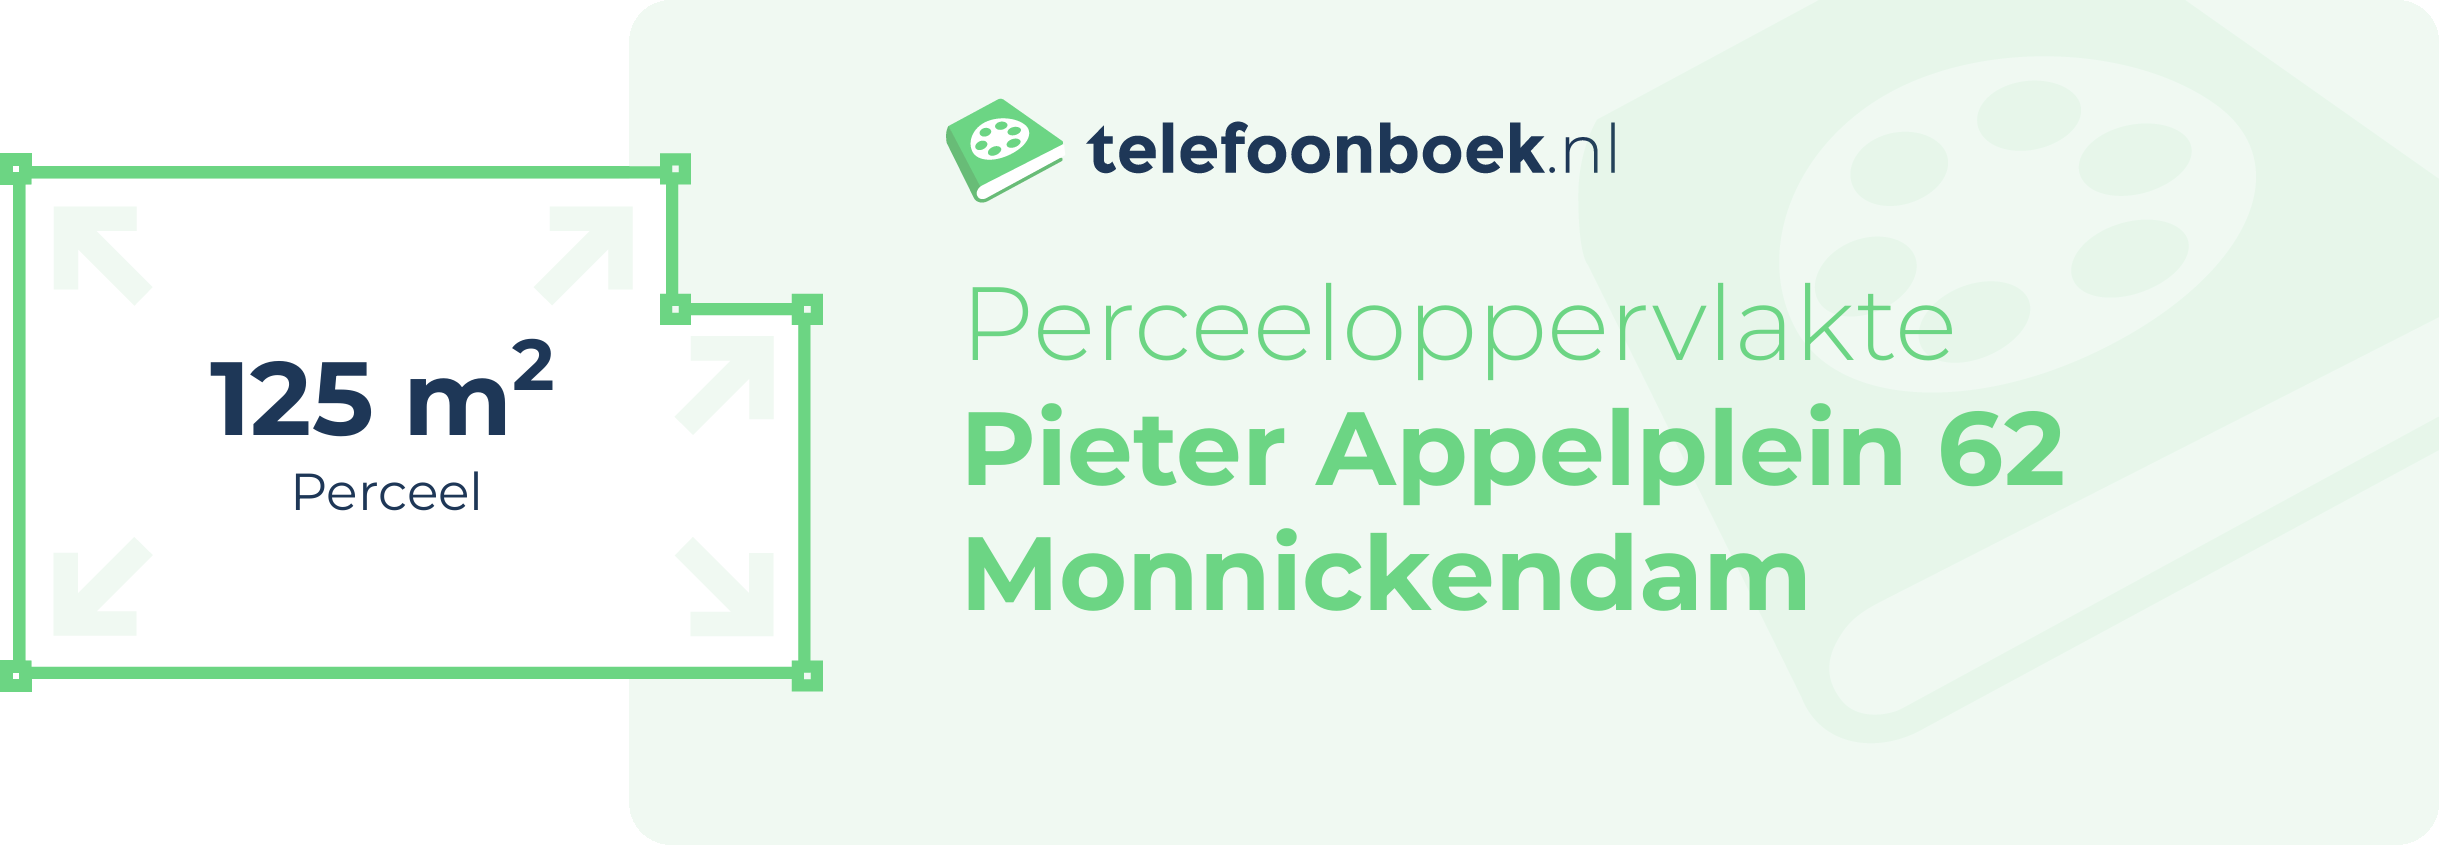 Perceeloppervlakte Pieter Appelplein 62 Monnickendam